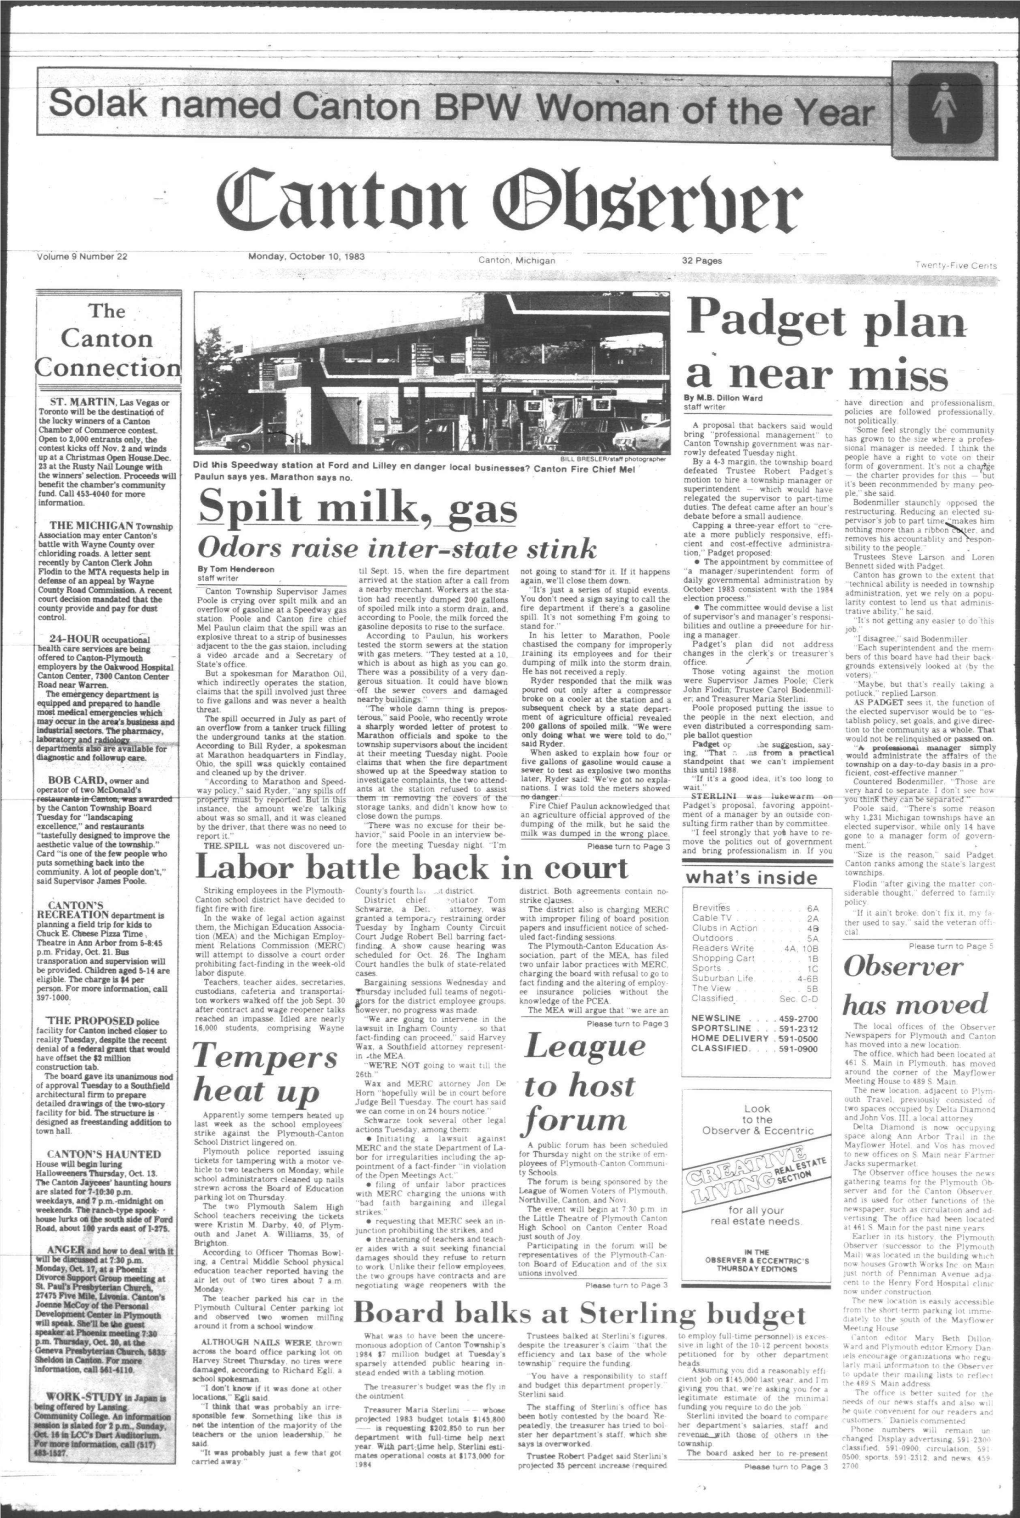 Canton Observer for October 10, 1983